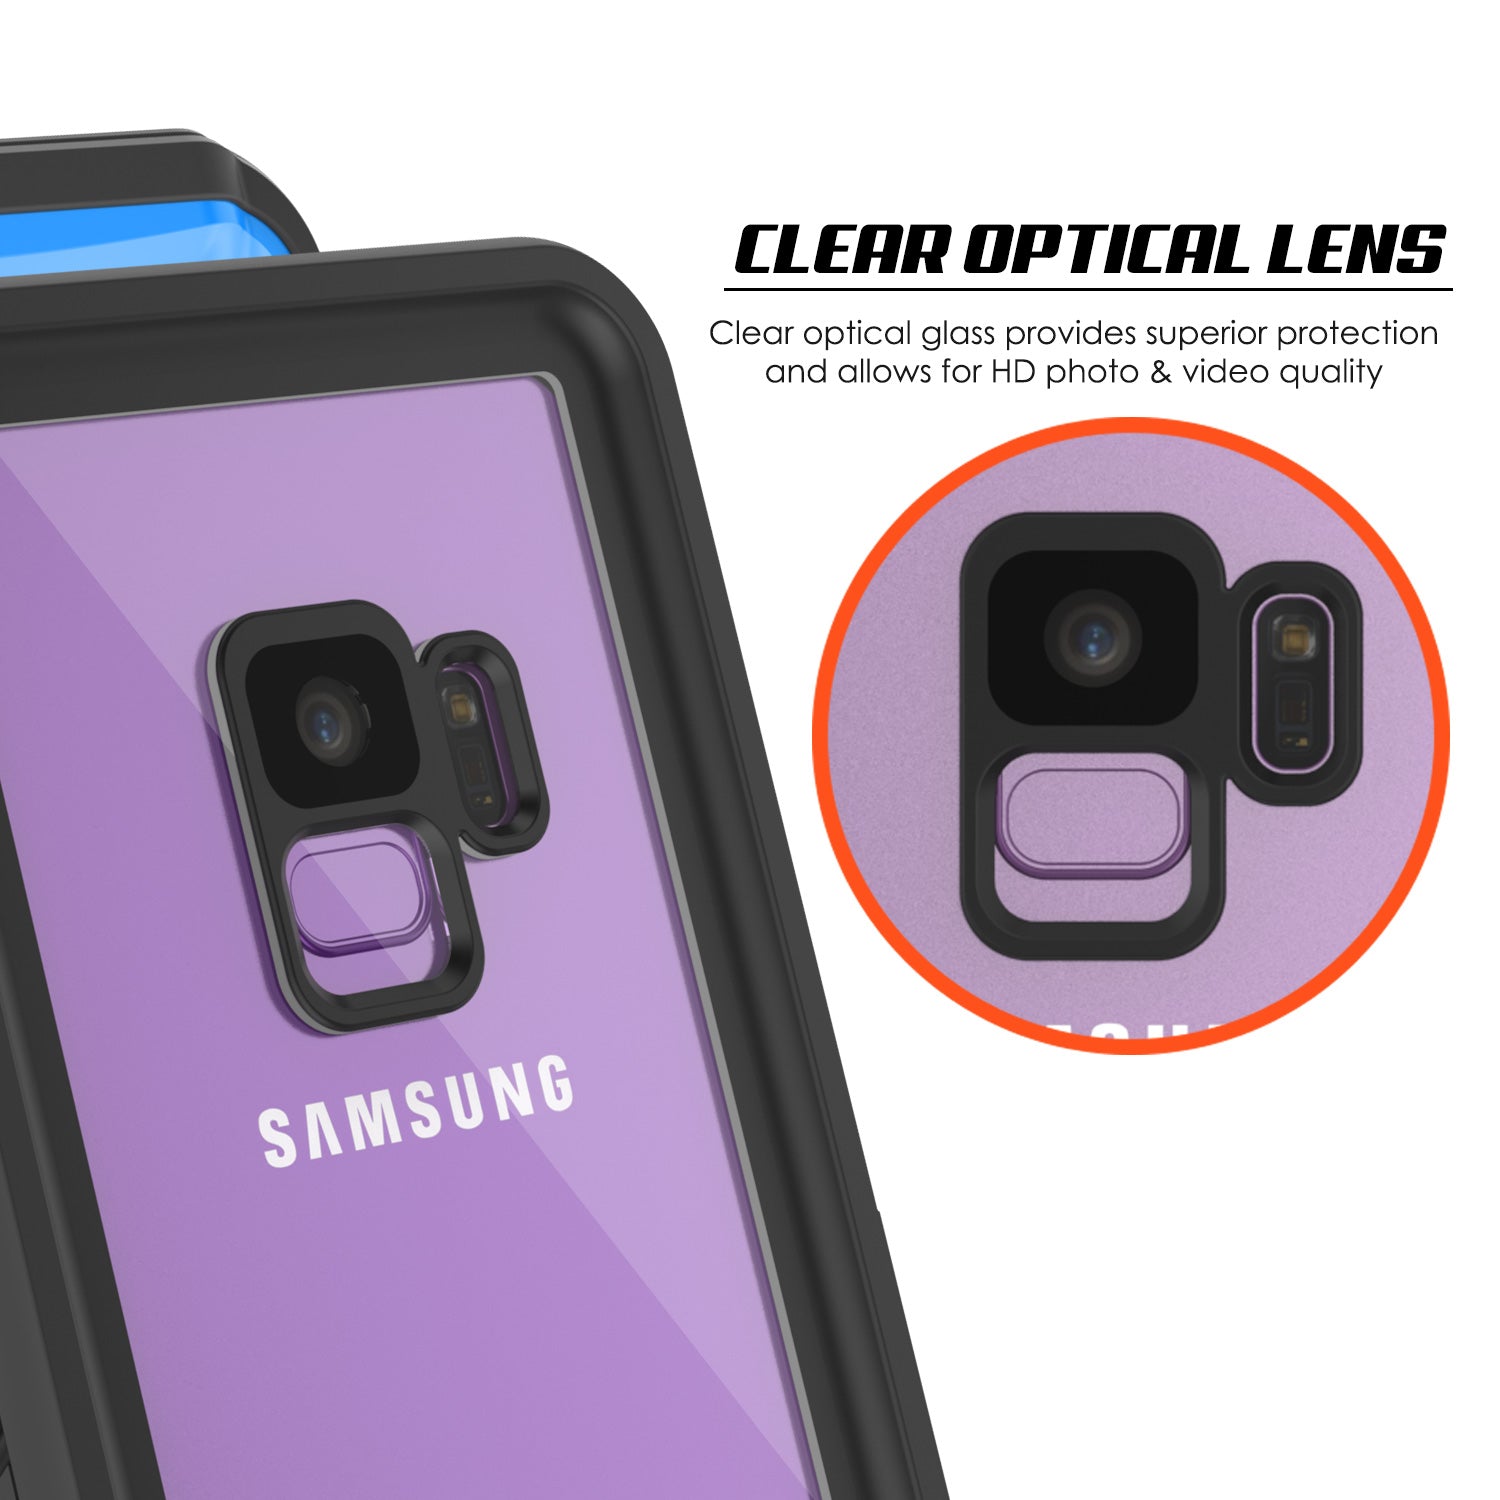 Galaxy S9 Plus Water/Shock/Snow/dirt proof Slim Case [Light Blue]